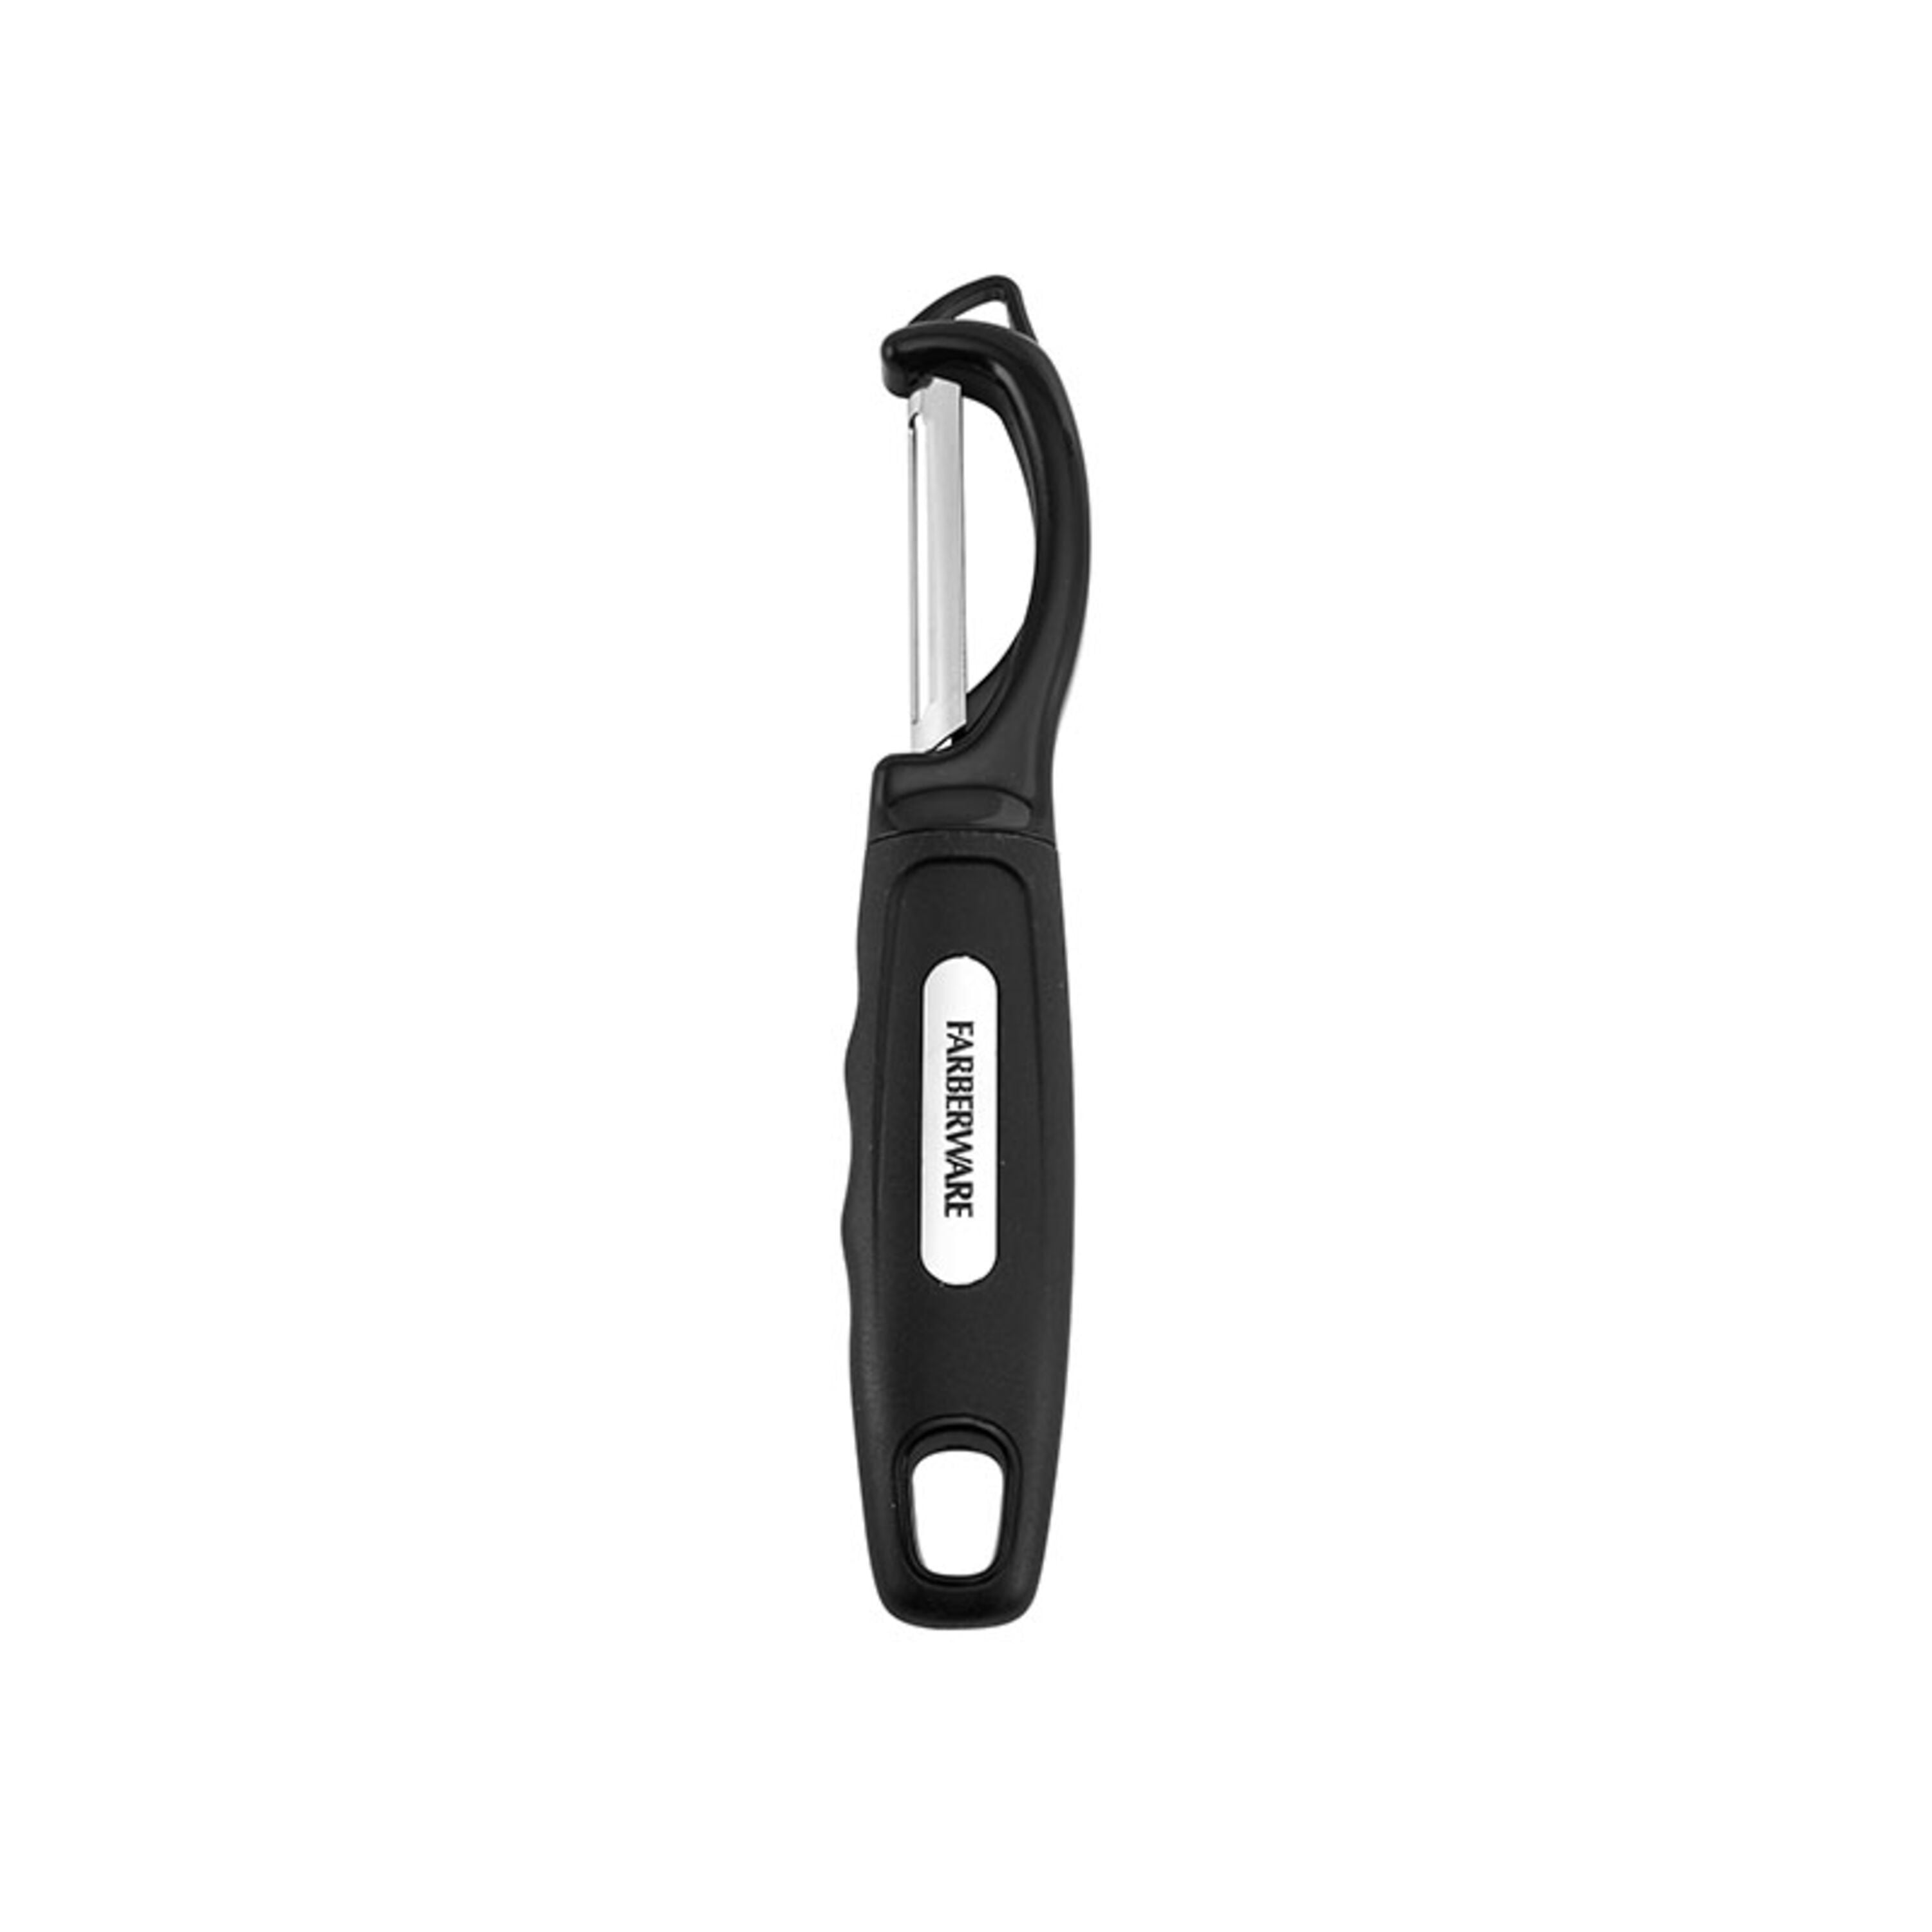 Farberware Professional Swivel Peeler with Stainless Steel Blade, 2 Pack